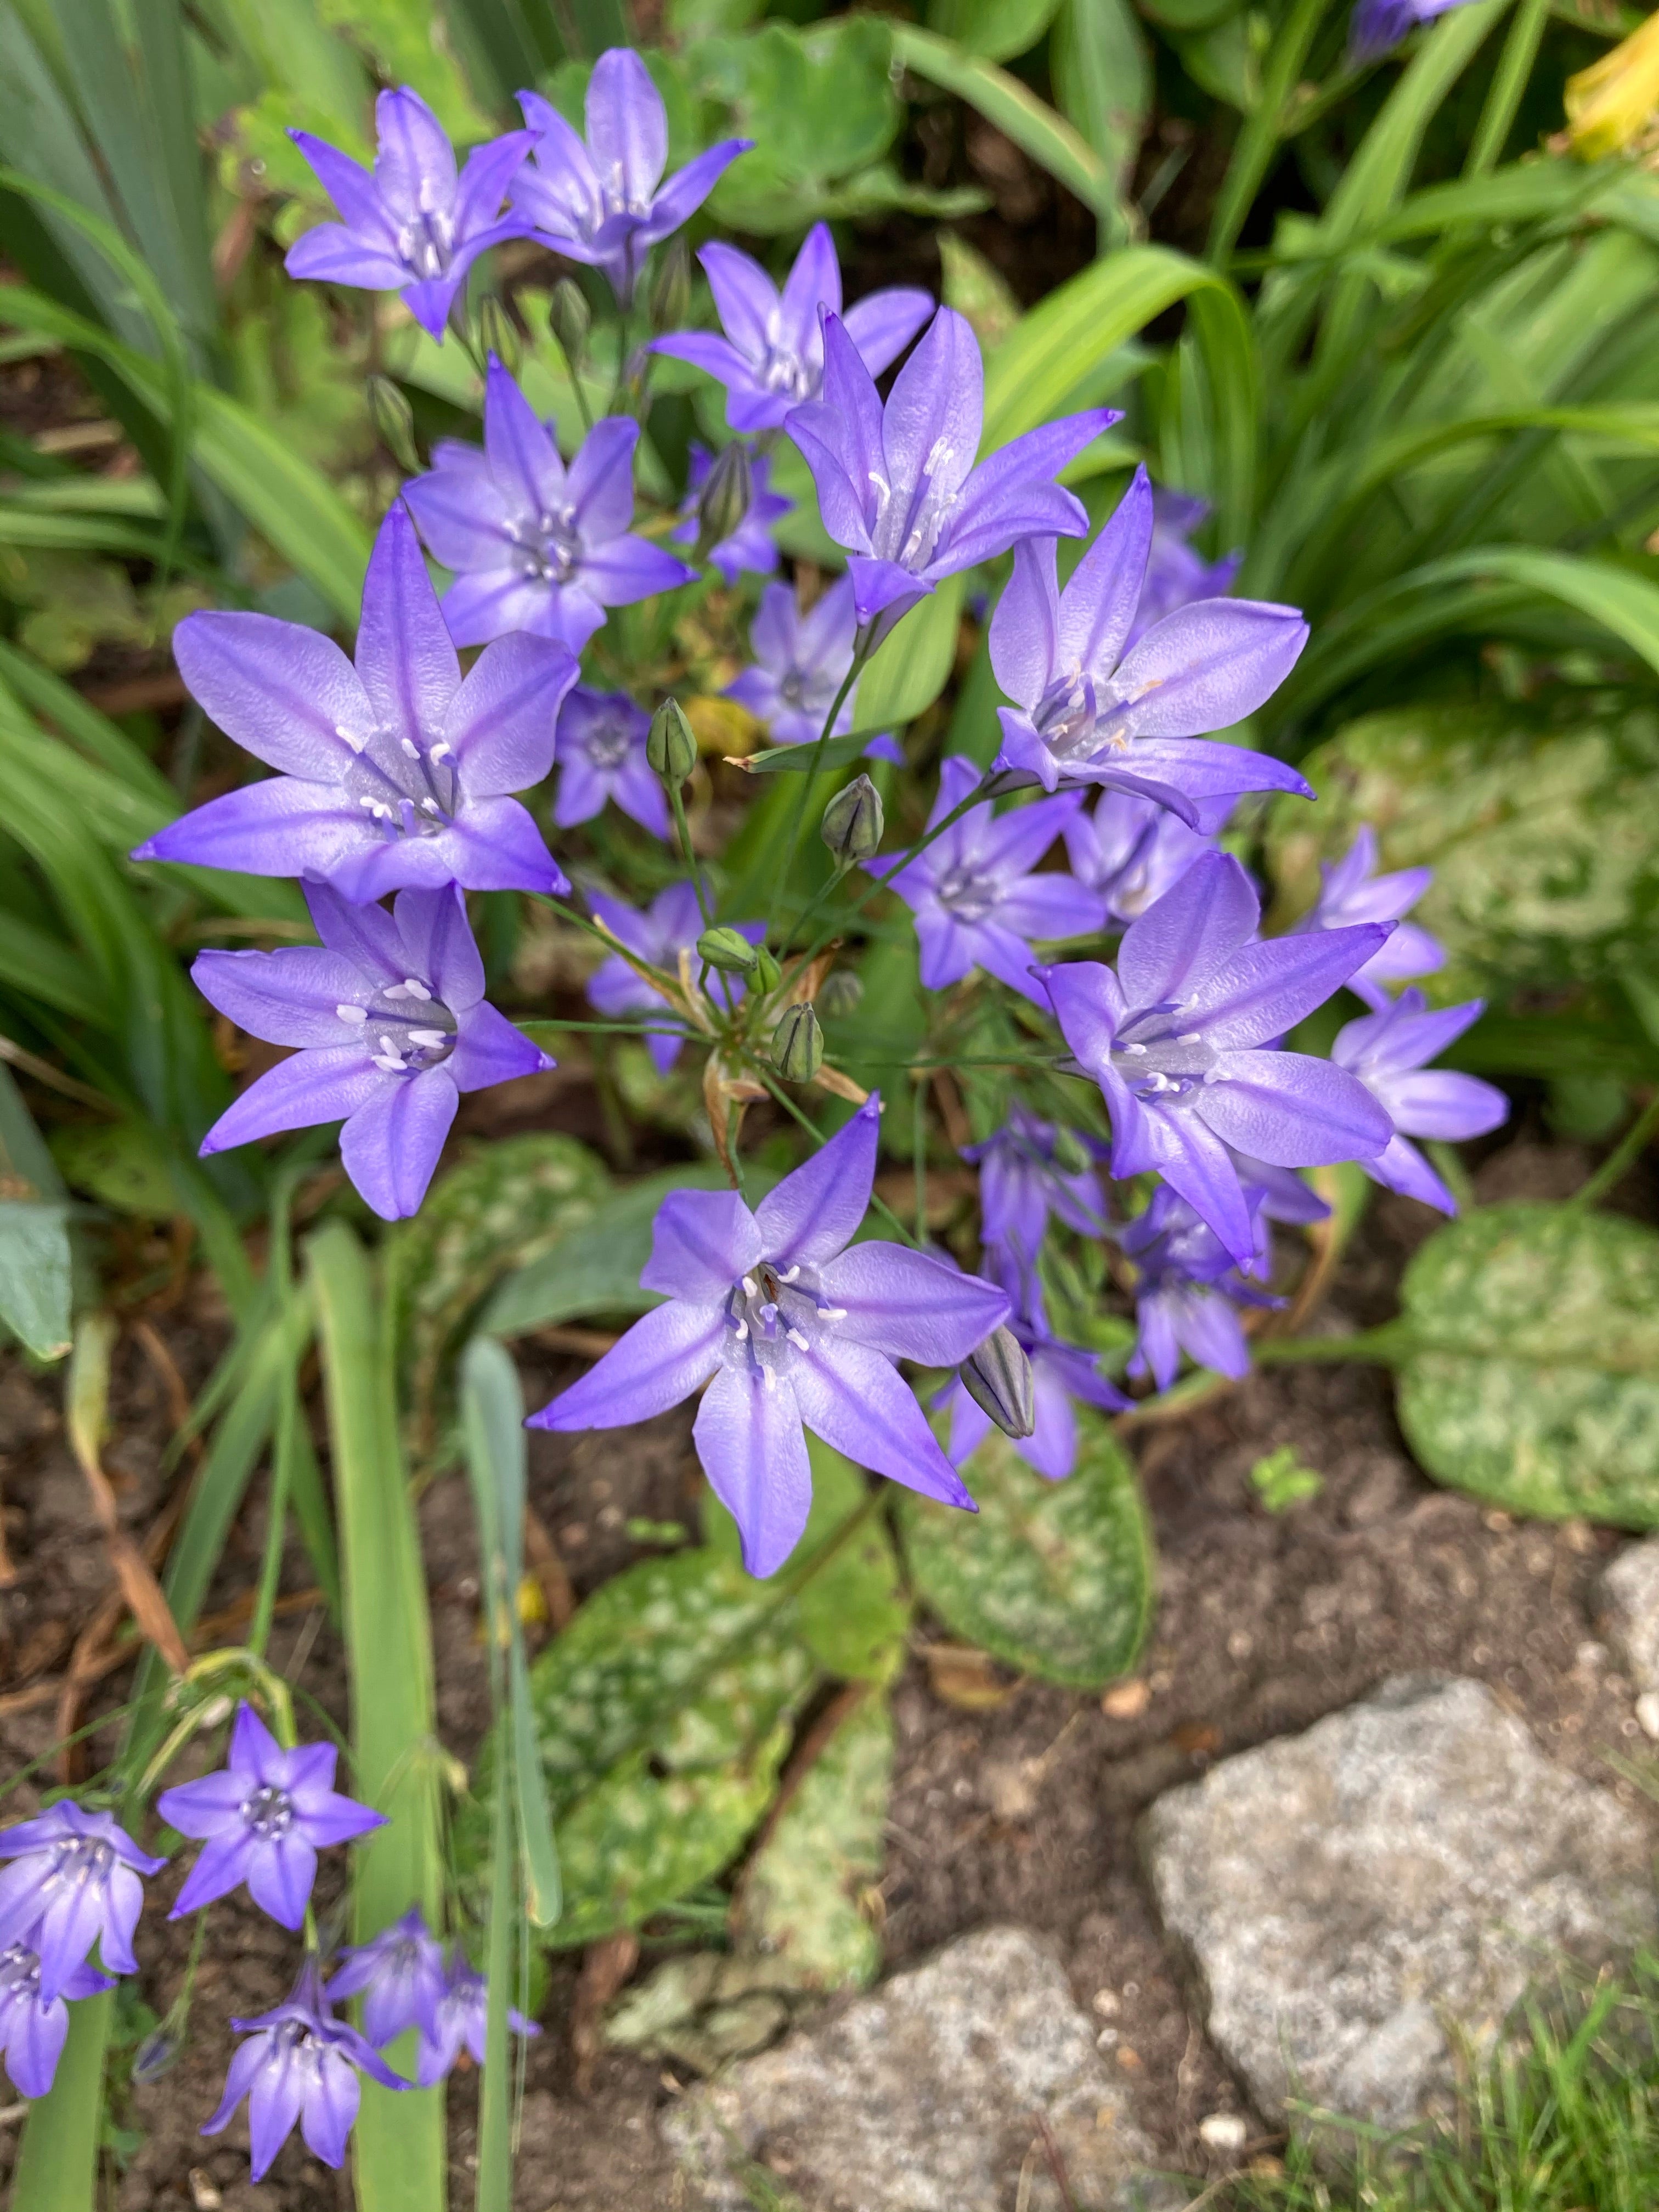 20 Triteleia laxa 'Fabiola' or Triplet Lily (Bulbs) Free UK Postage